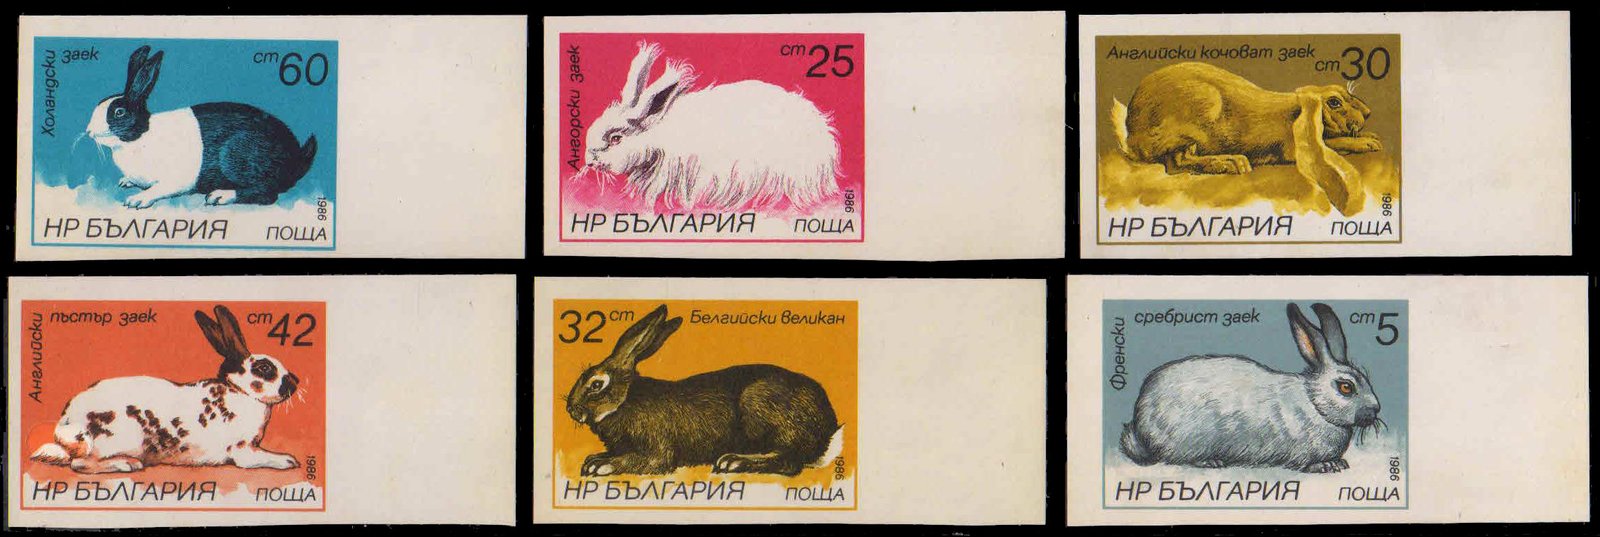 BULGARIA 1986-Rabbits Black & White, Animal, Imperf Set of 6 with Side Margins, MNH, S.G. 3324-3329